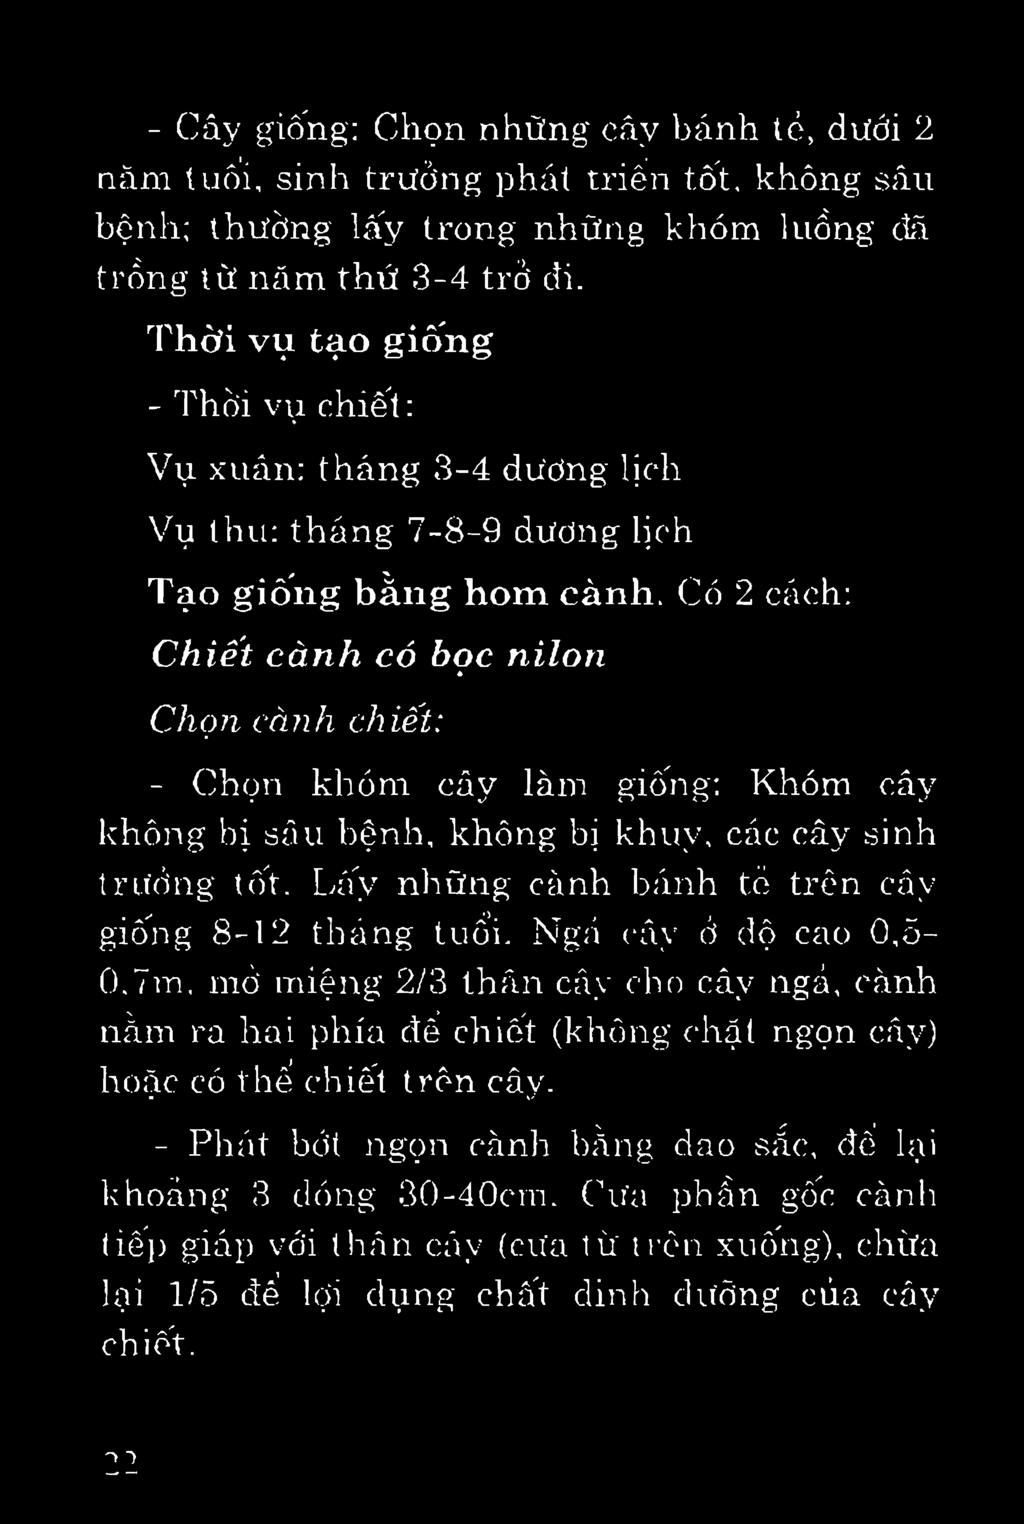 Co 2 each: Chiet canh co boc nilon Chon canh chiet: - Chon khom cay lam giong: Khom cay khong hi sau benh, khong hi khuy, cac cay sinh tracing tot.